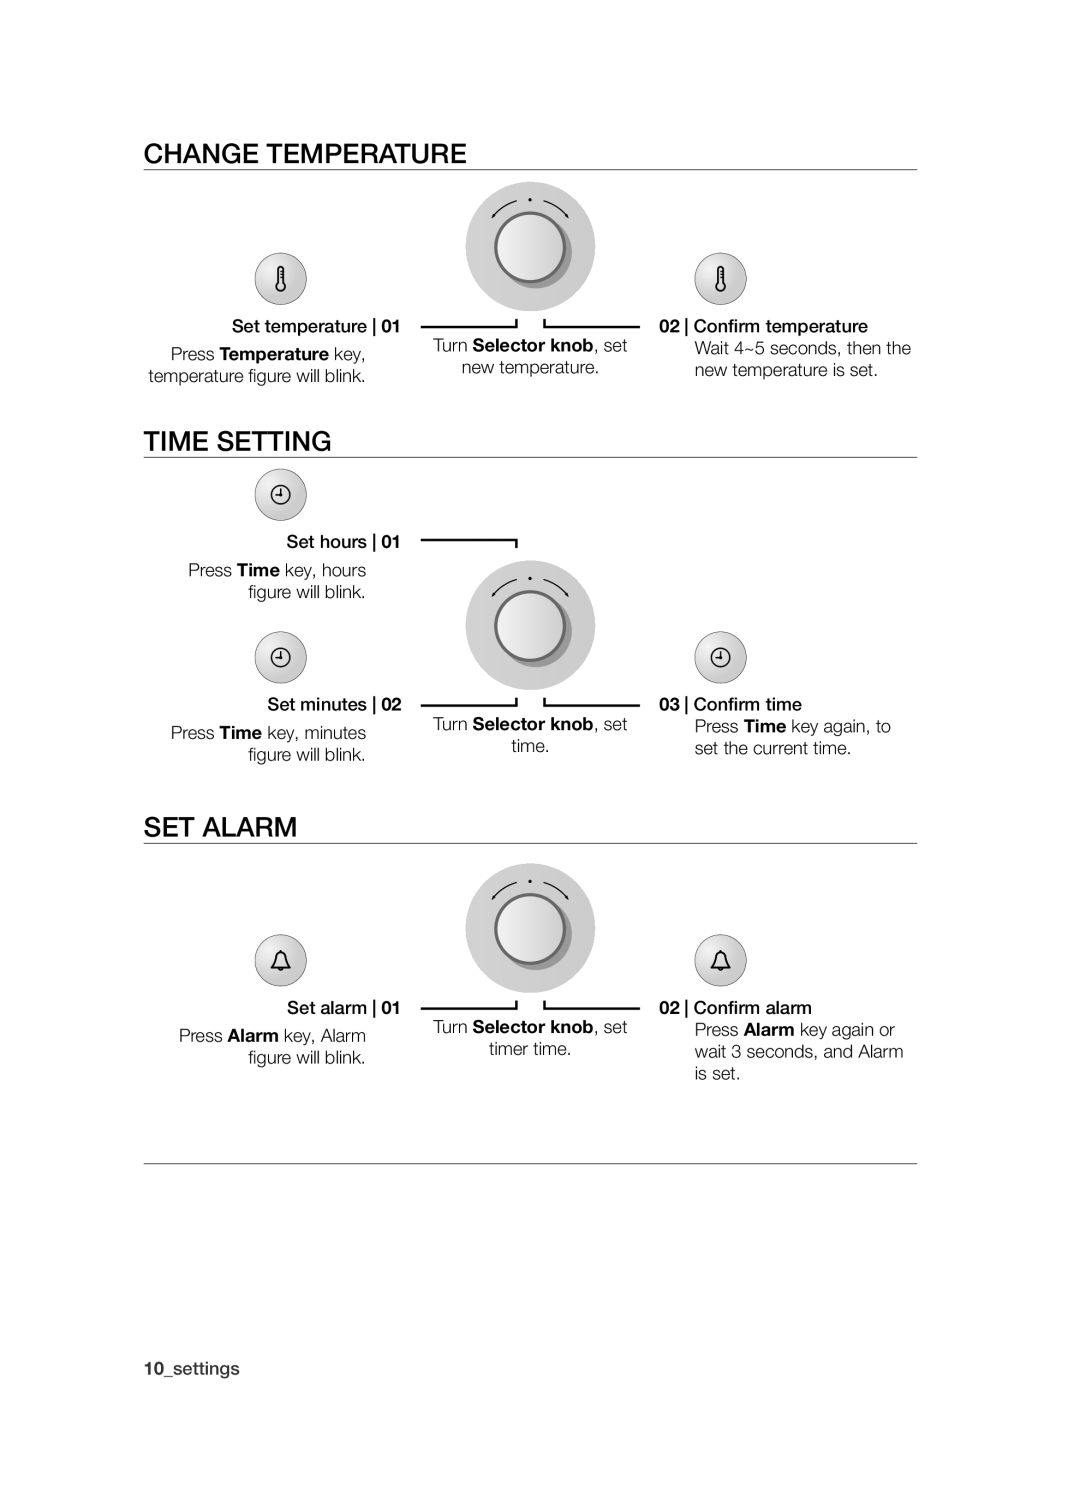 Samsung BT621 Series user manual Change Temperature, Time Setting, Set Alarm, 10settings, Press Temperature key 